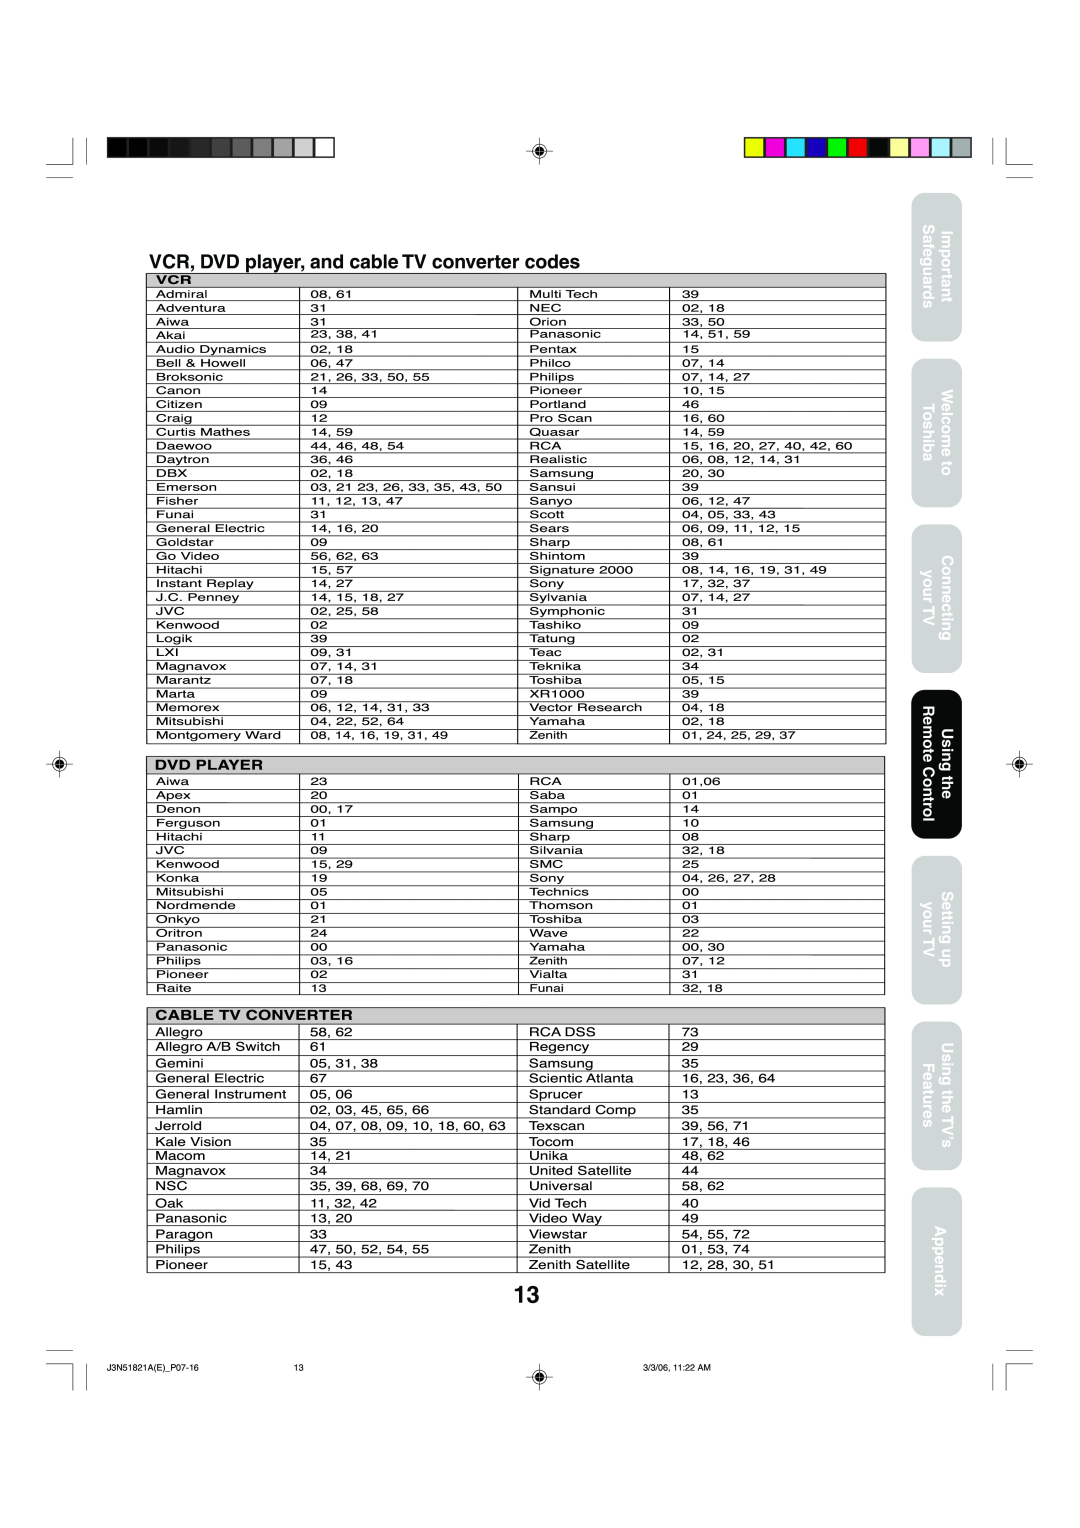 Toshiba 32A36C appendix 14,16, arta, 02,18, FunaiCADSS 